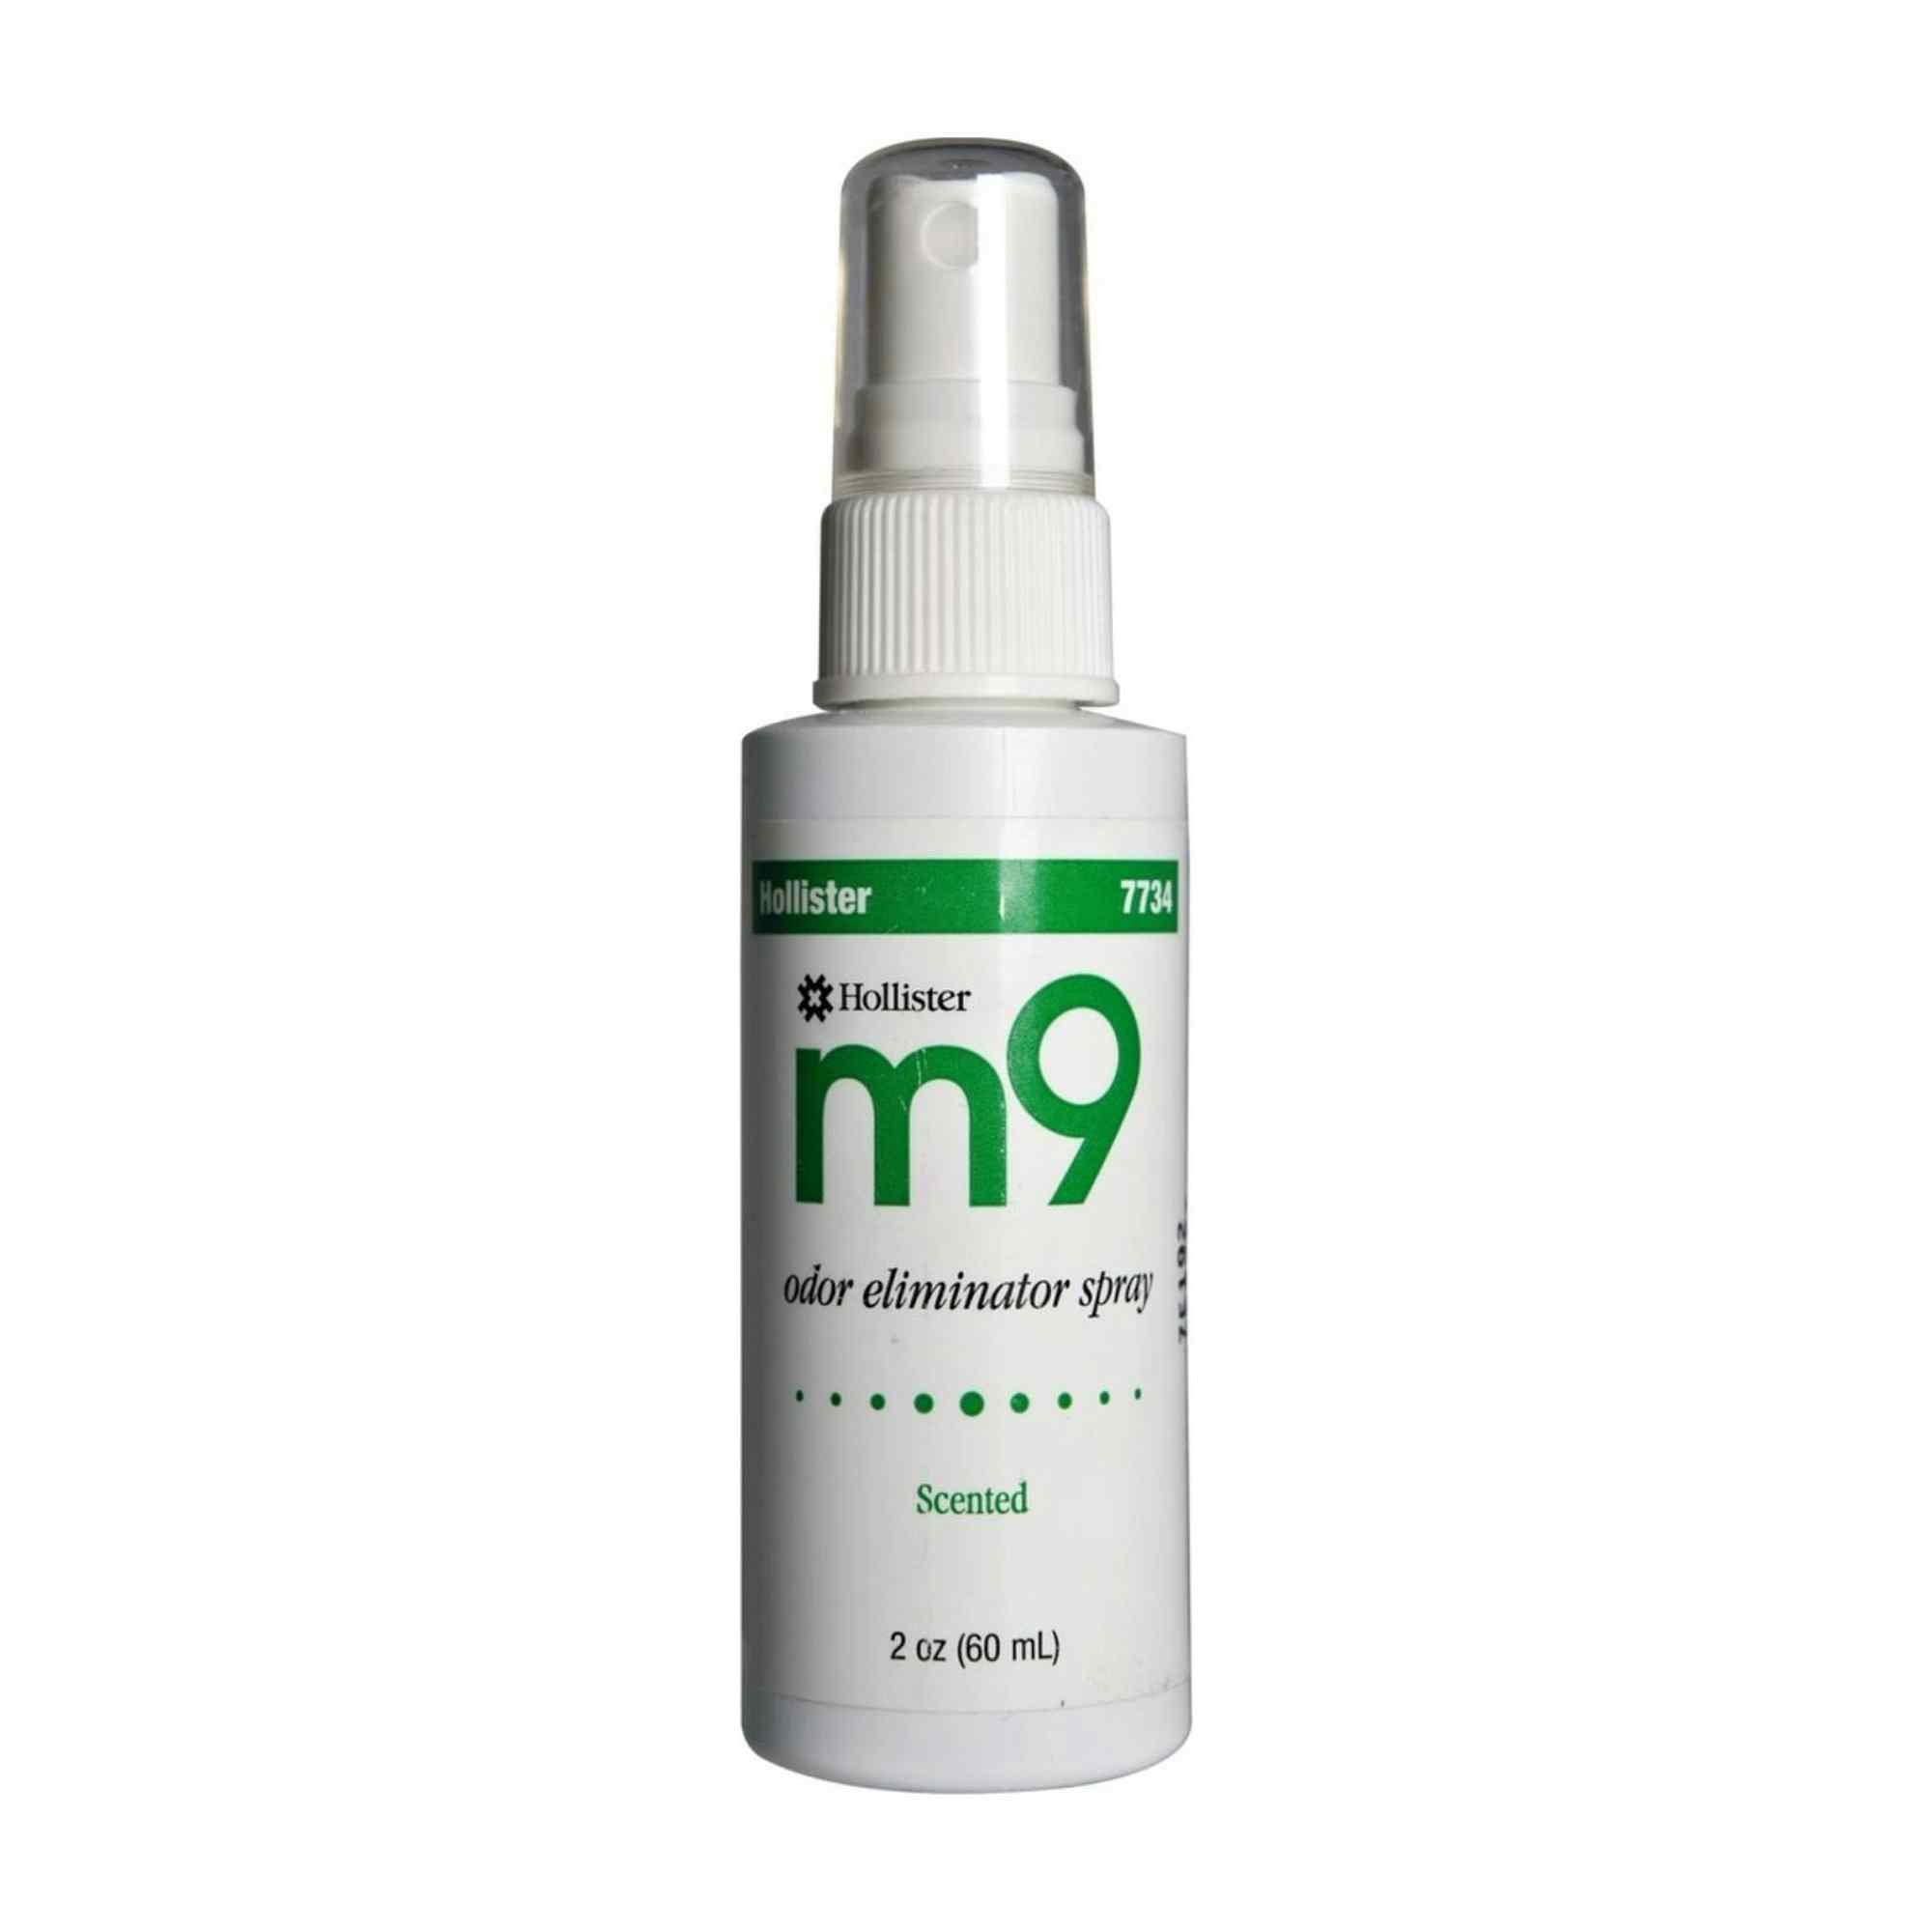 Hollister M9  Odor Eliminator Spray, Scented, 2 oz., 7734, 1 Each